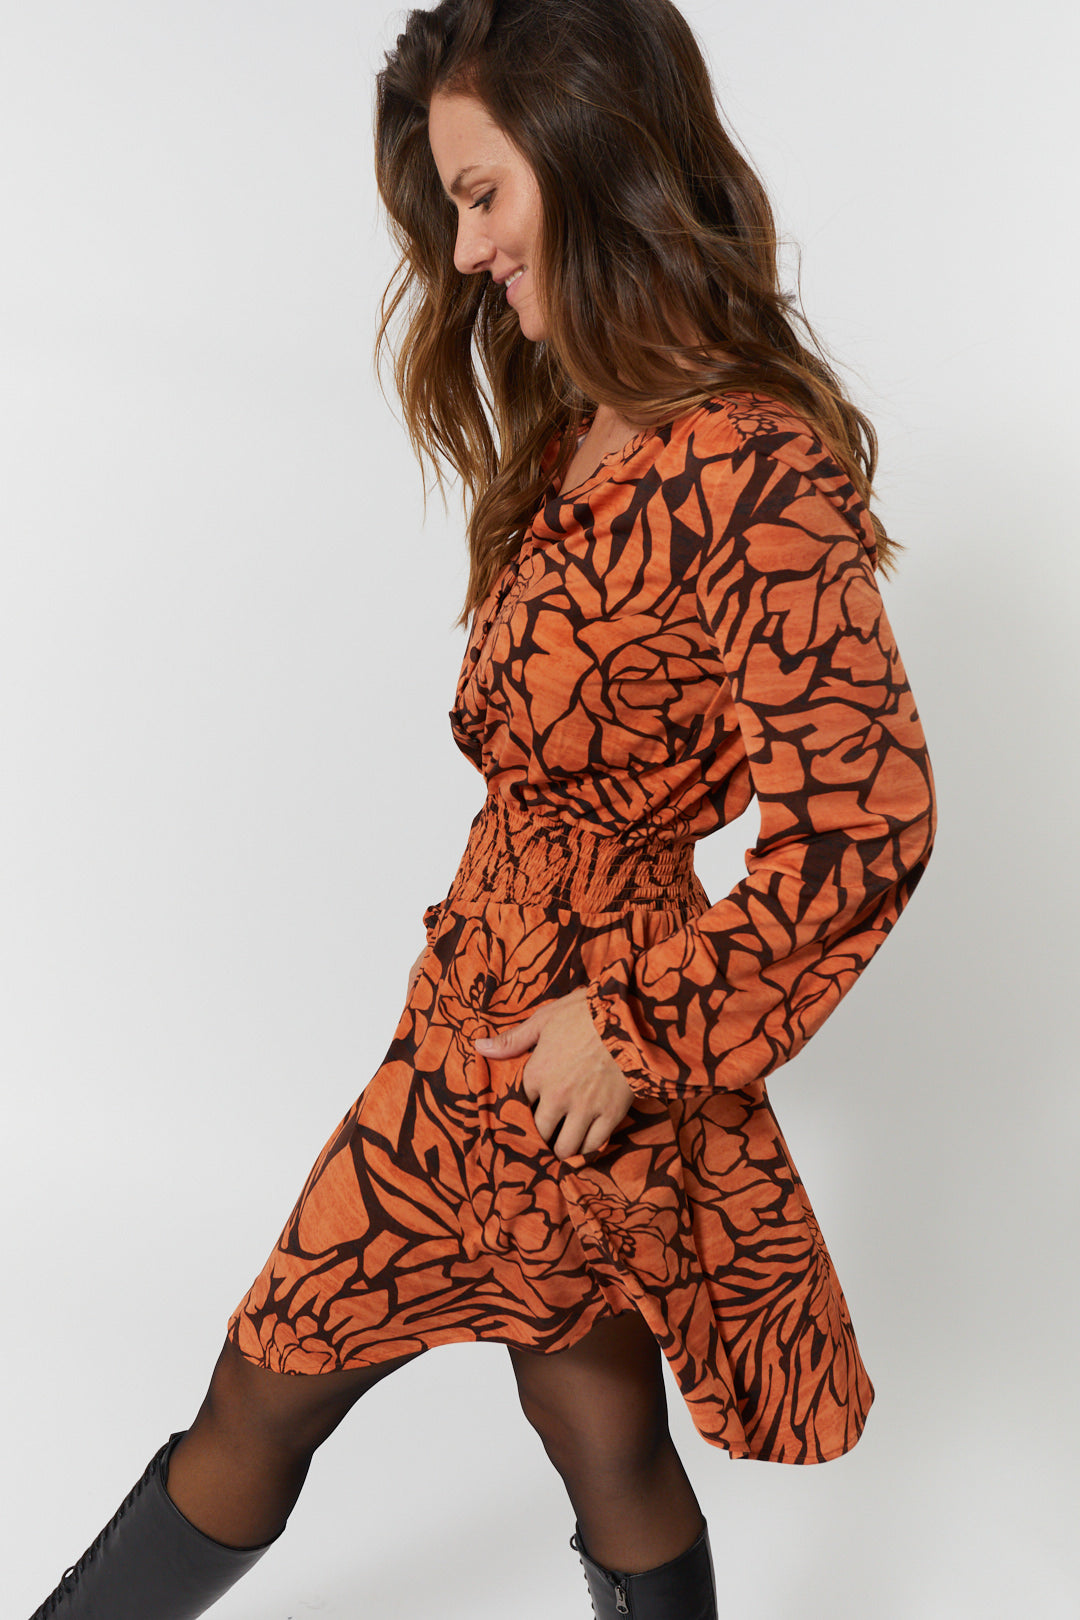 Robe à motifs floraux orange | Cassidy